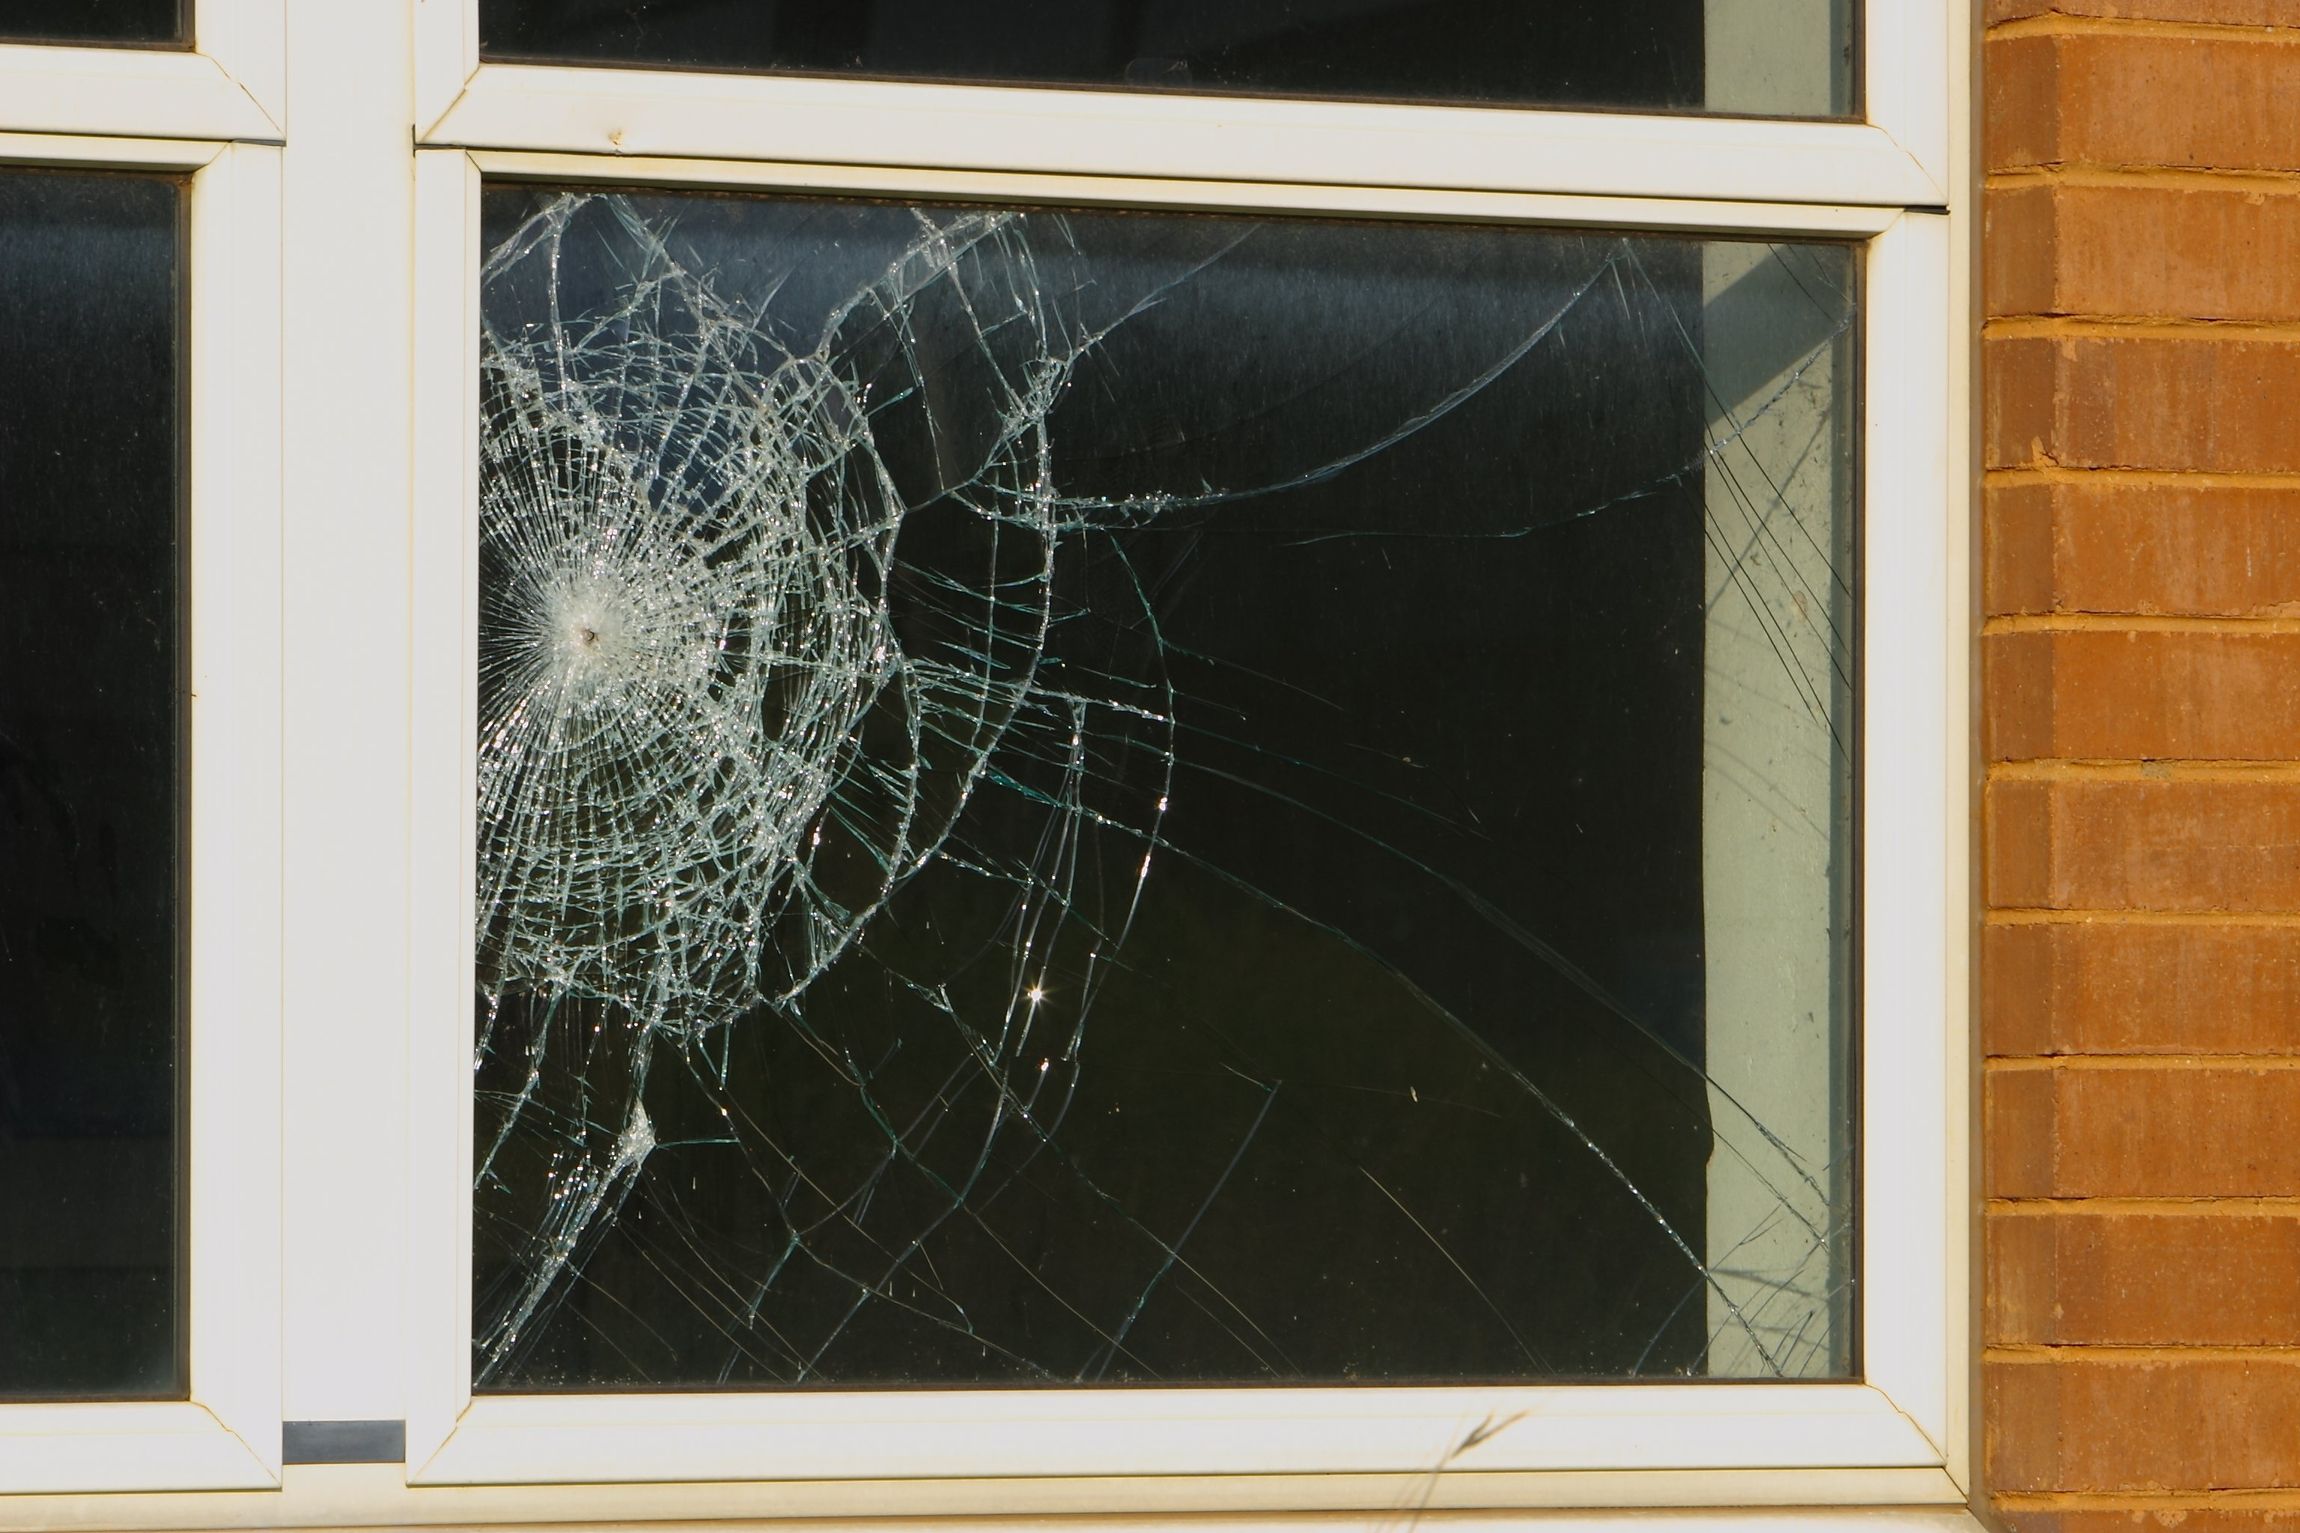 cracked window glass